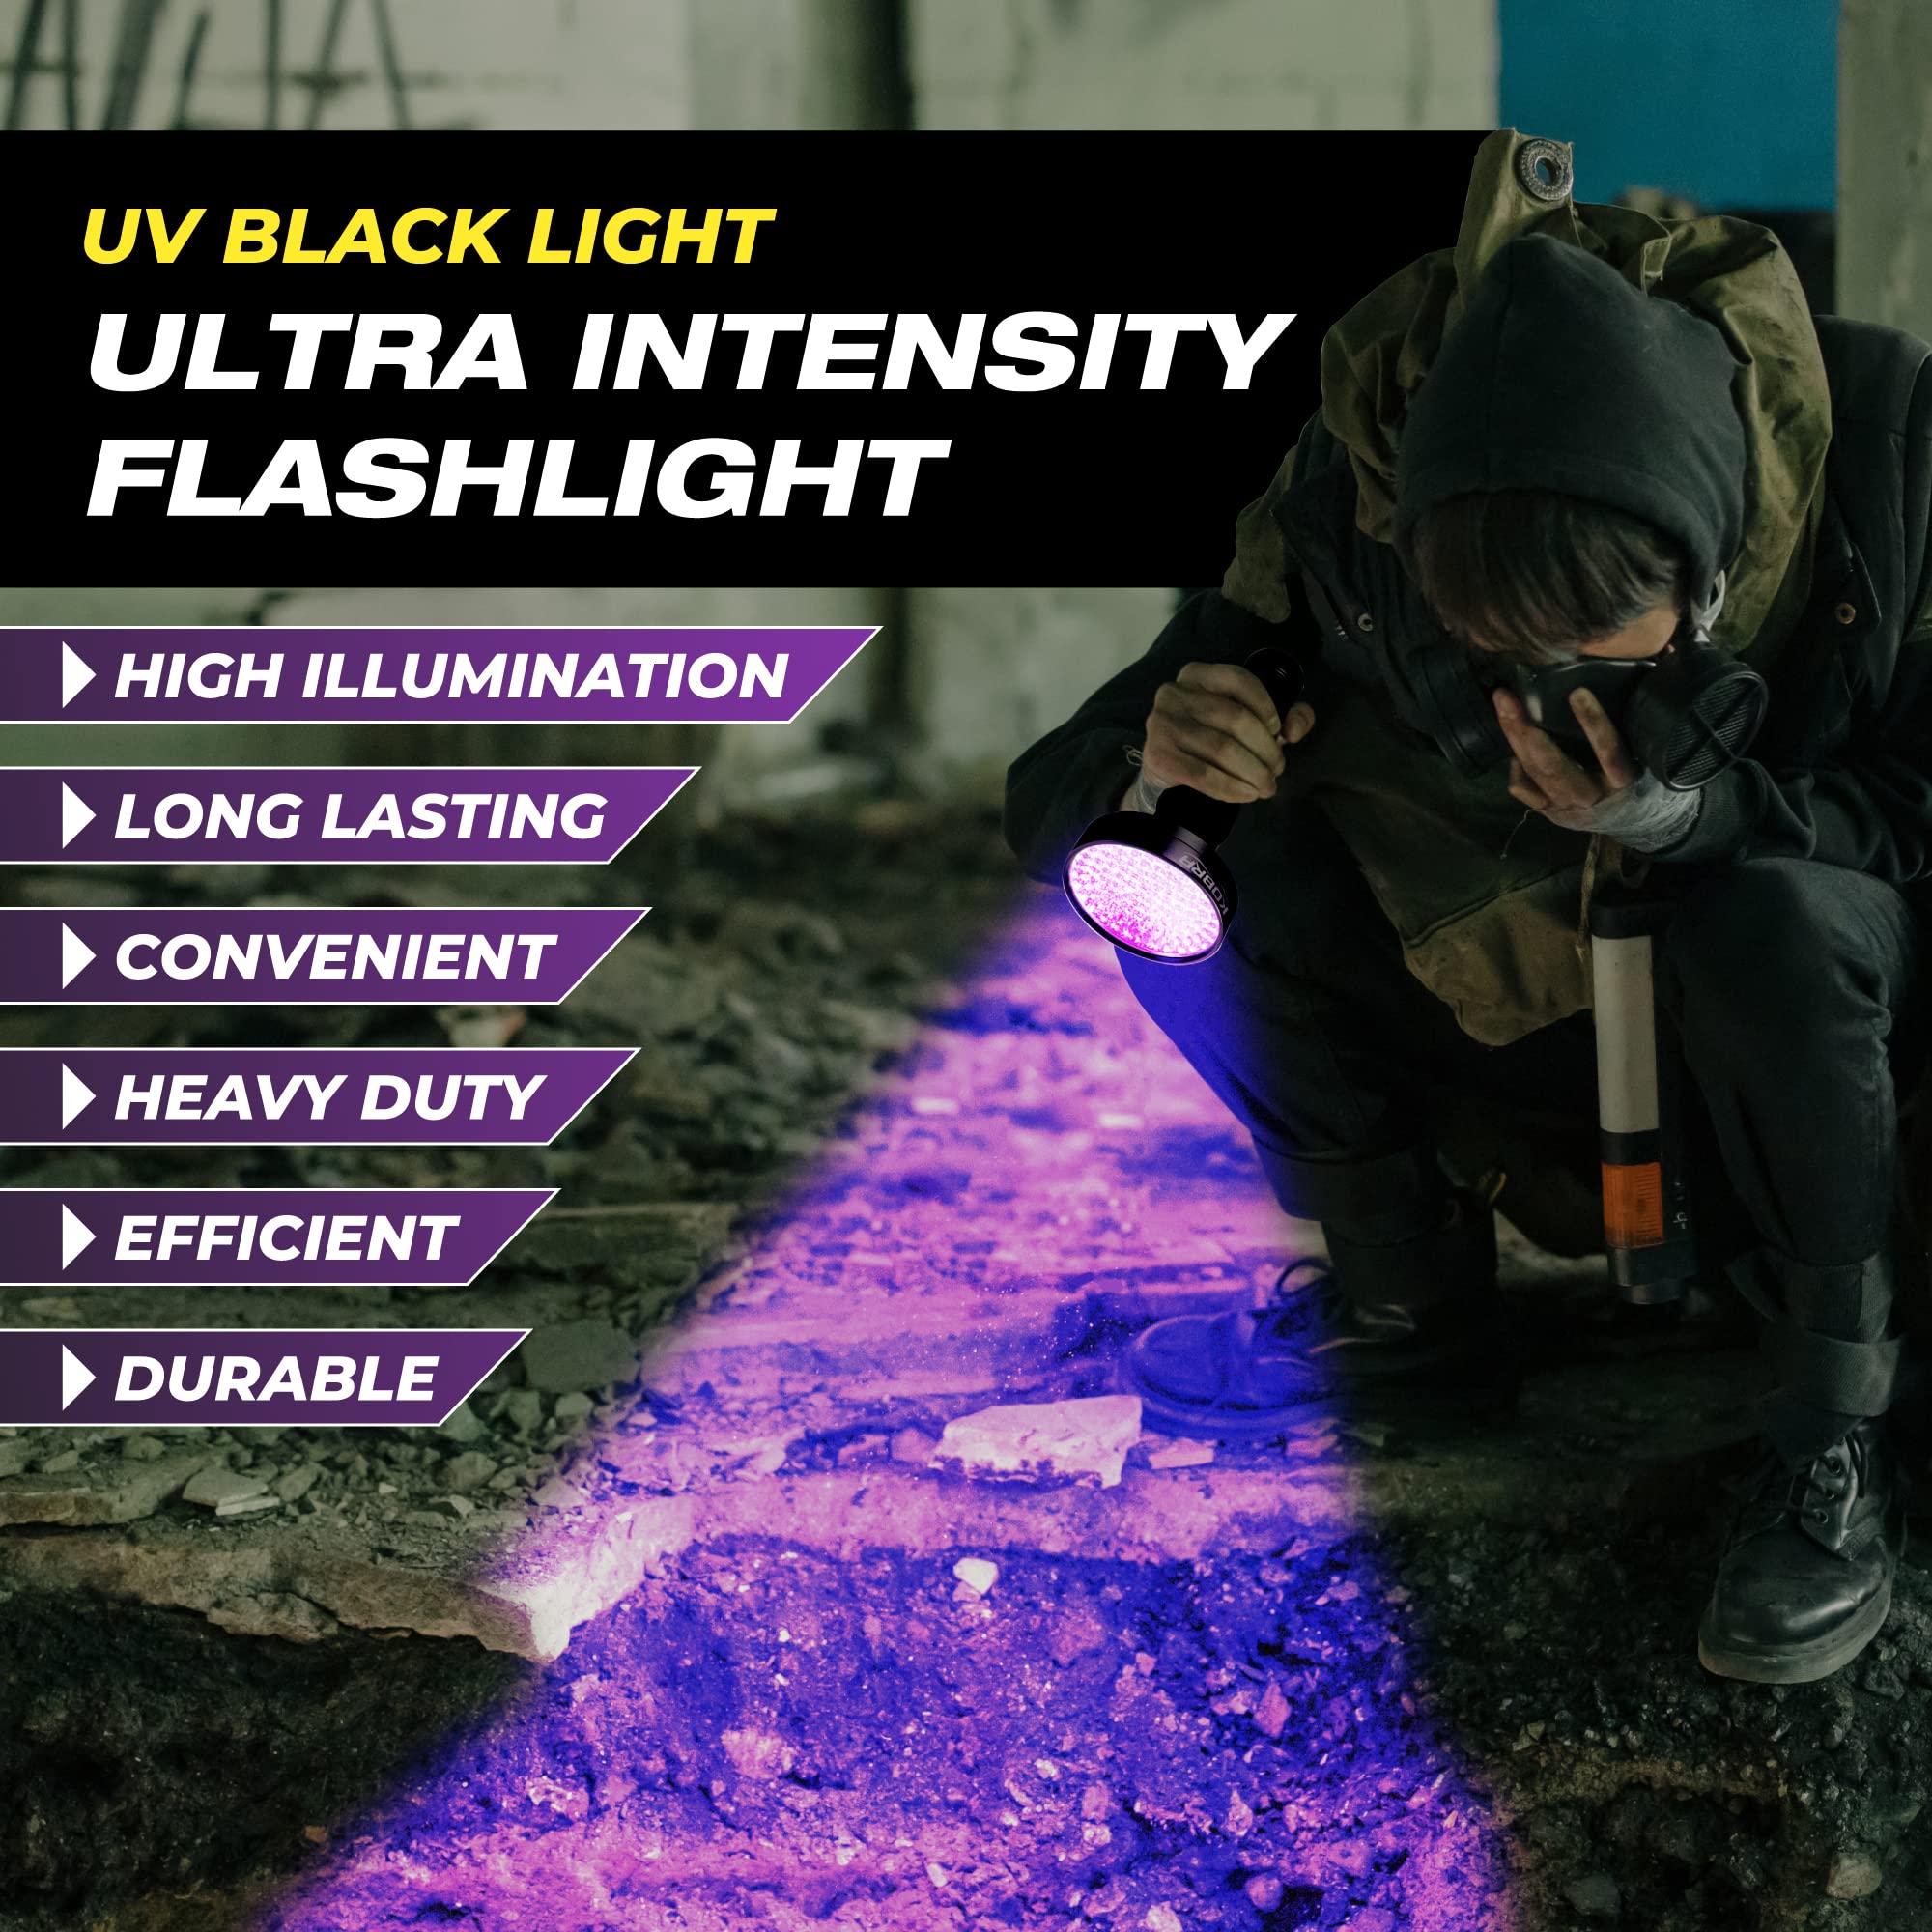 Kobra Black Light Flashlight 100 LED Lamp and Blacklight for Home & Hotel Inspection, Pet Urine & Stains - Ultra Intensity 18W 385-395nm LEDs Spot Counterfeit Money, Leaks, Scorpions (100 LED) (Black)